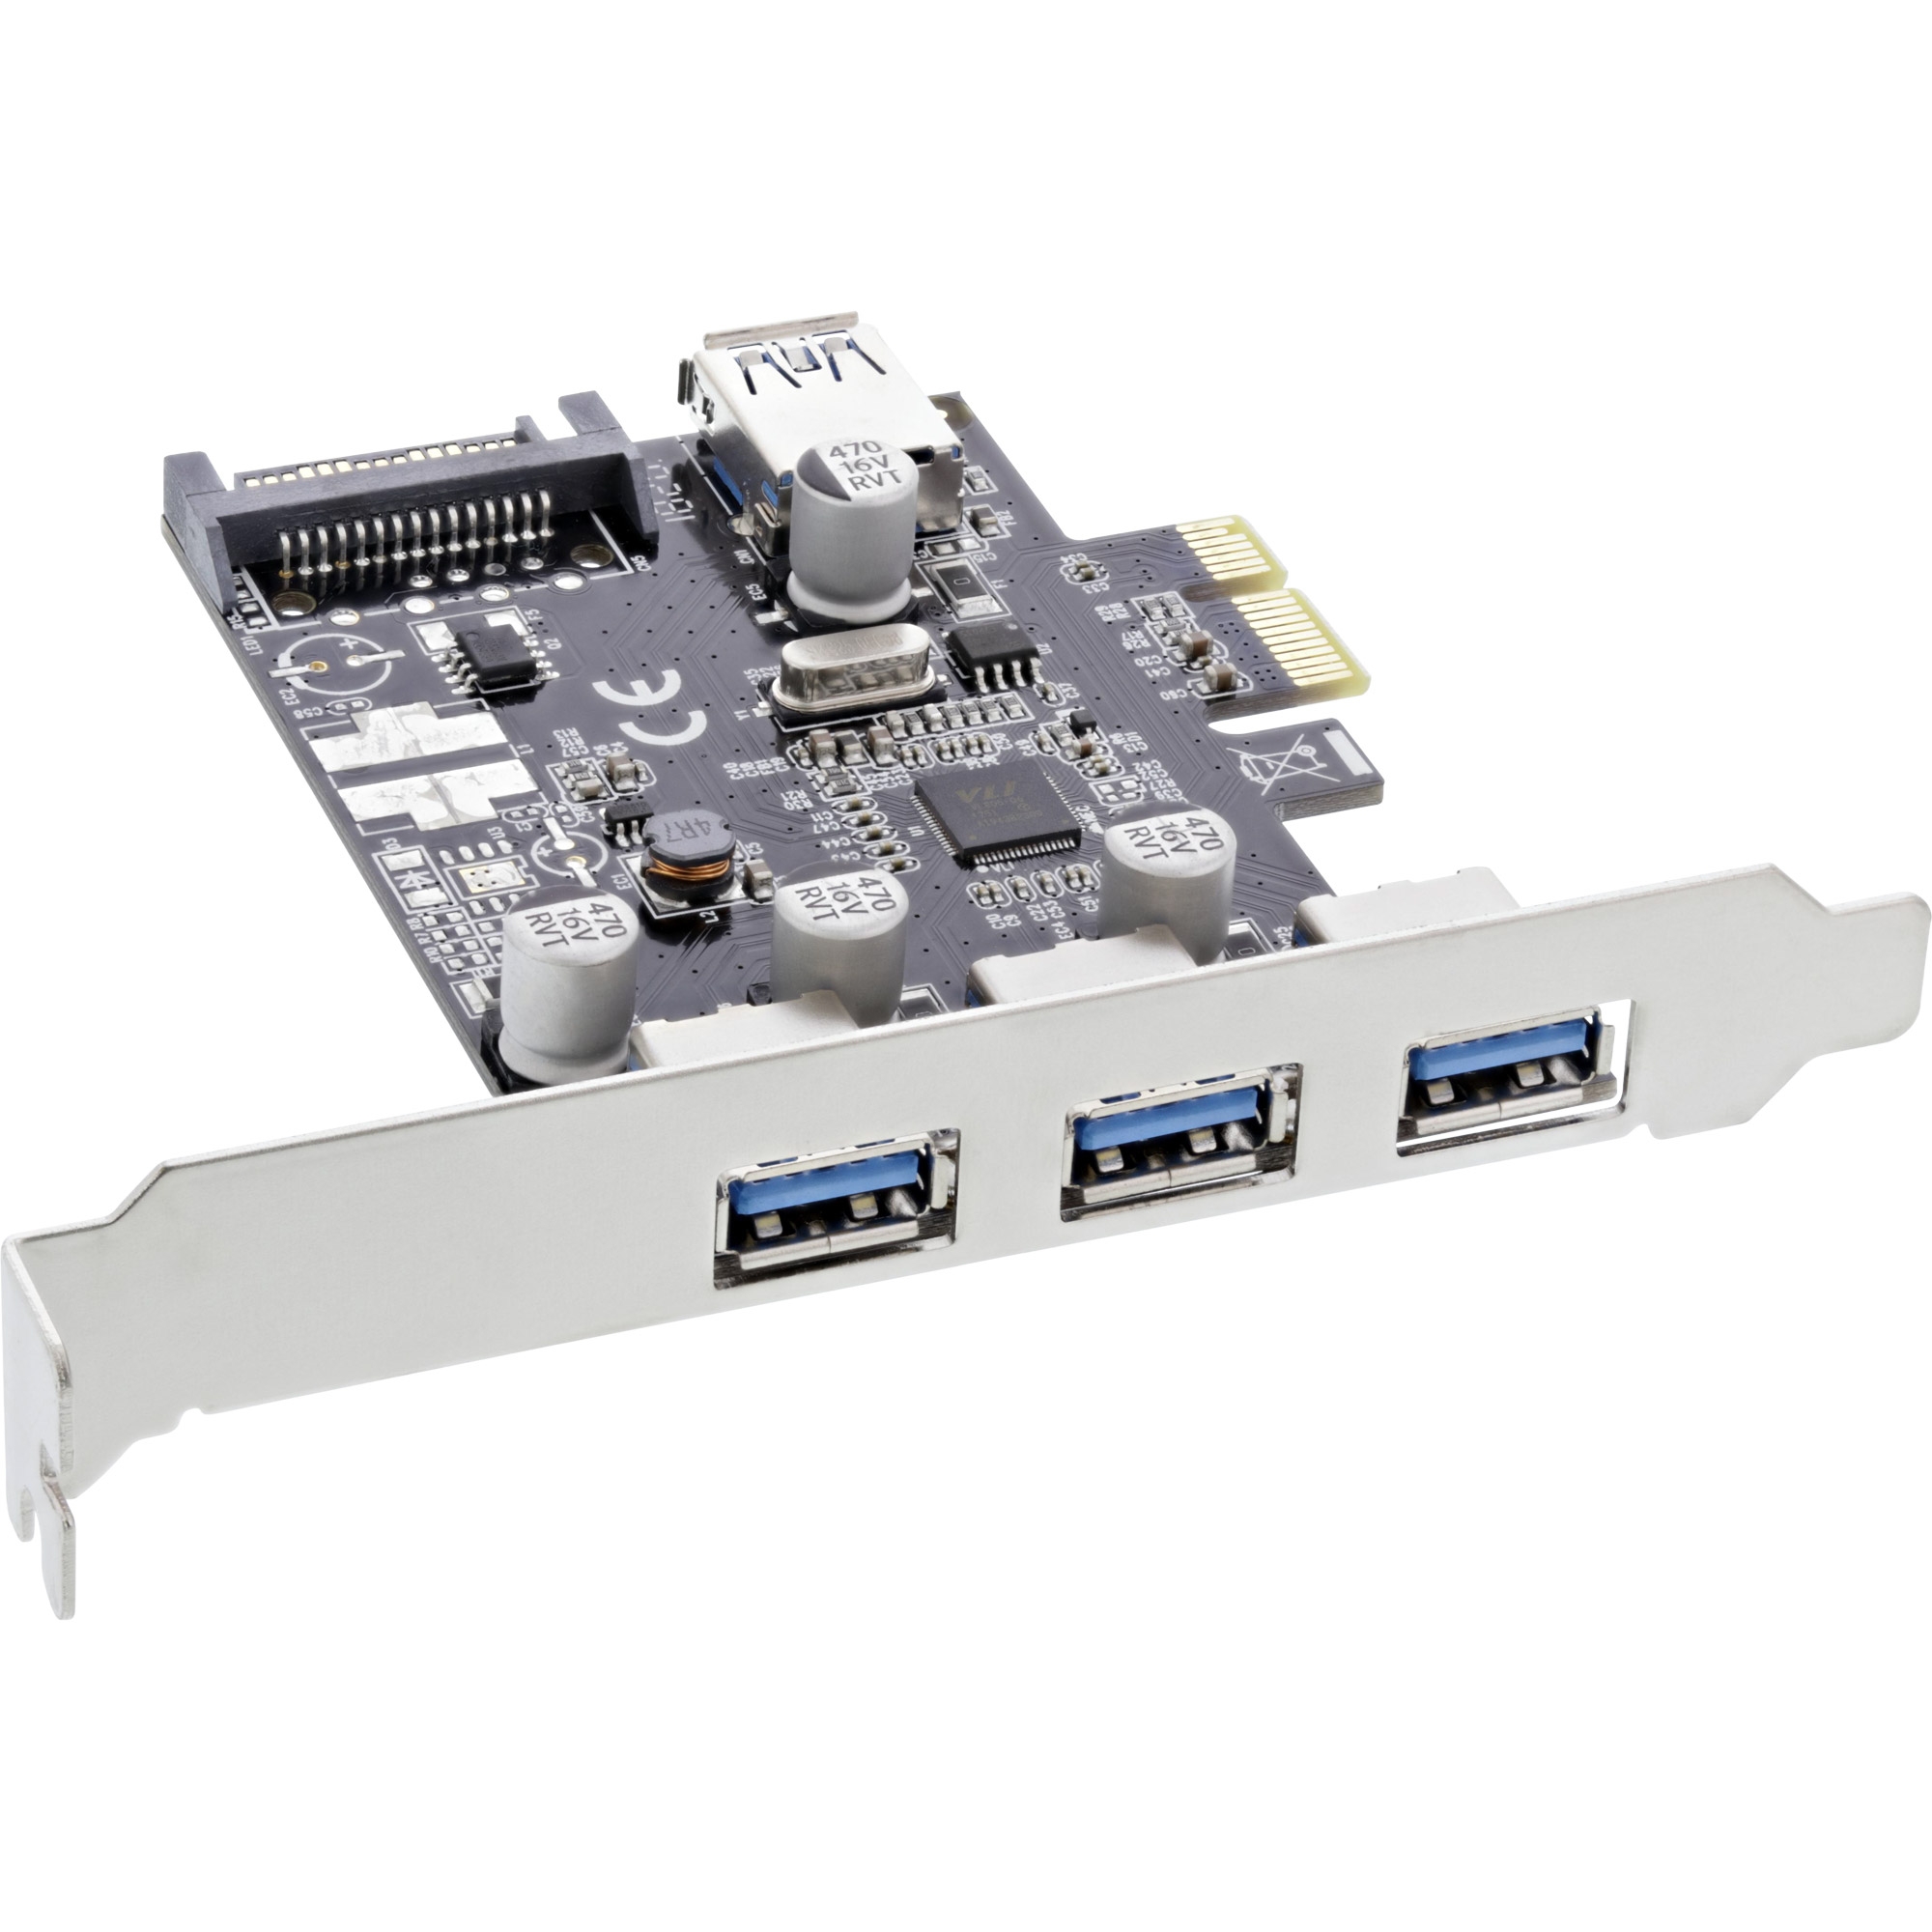 Usb 3.0 host controller. PCI USB 3.0 контроллер. Pinnacle OHCI Compliant FIREWIRE Controller.